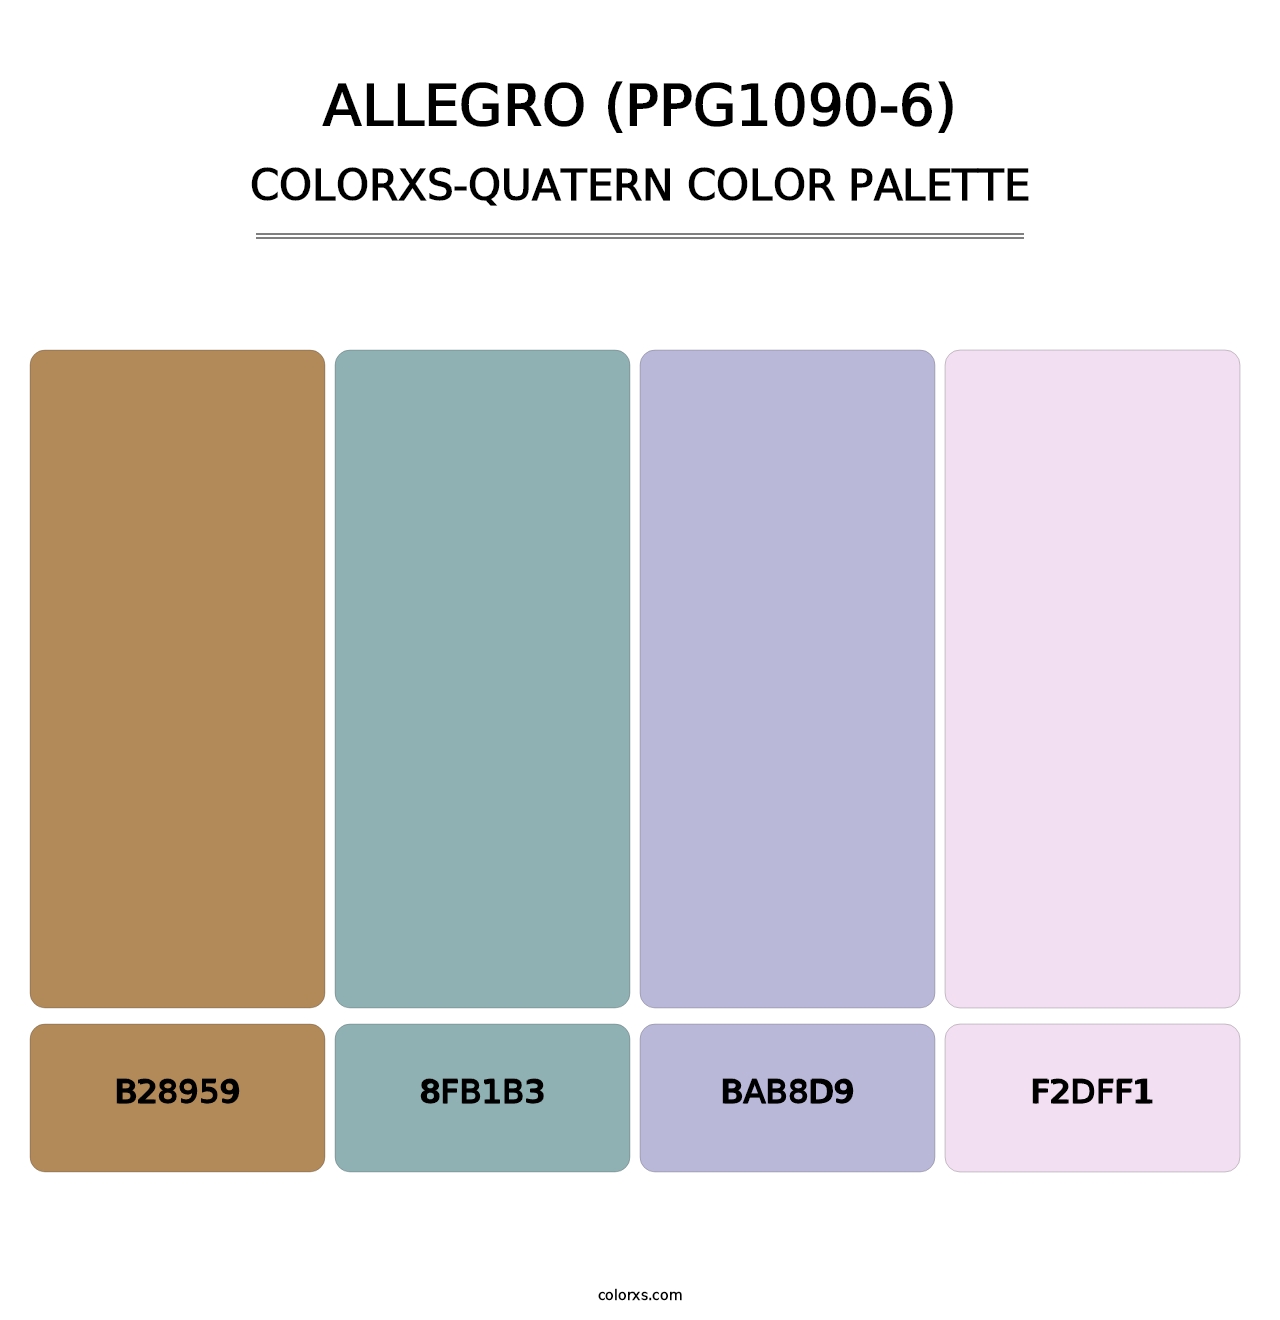 Allegro (PPG1090-6) - Colorxs Quatern Palette